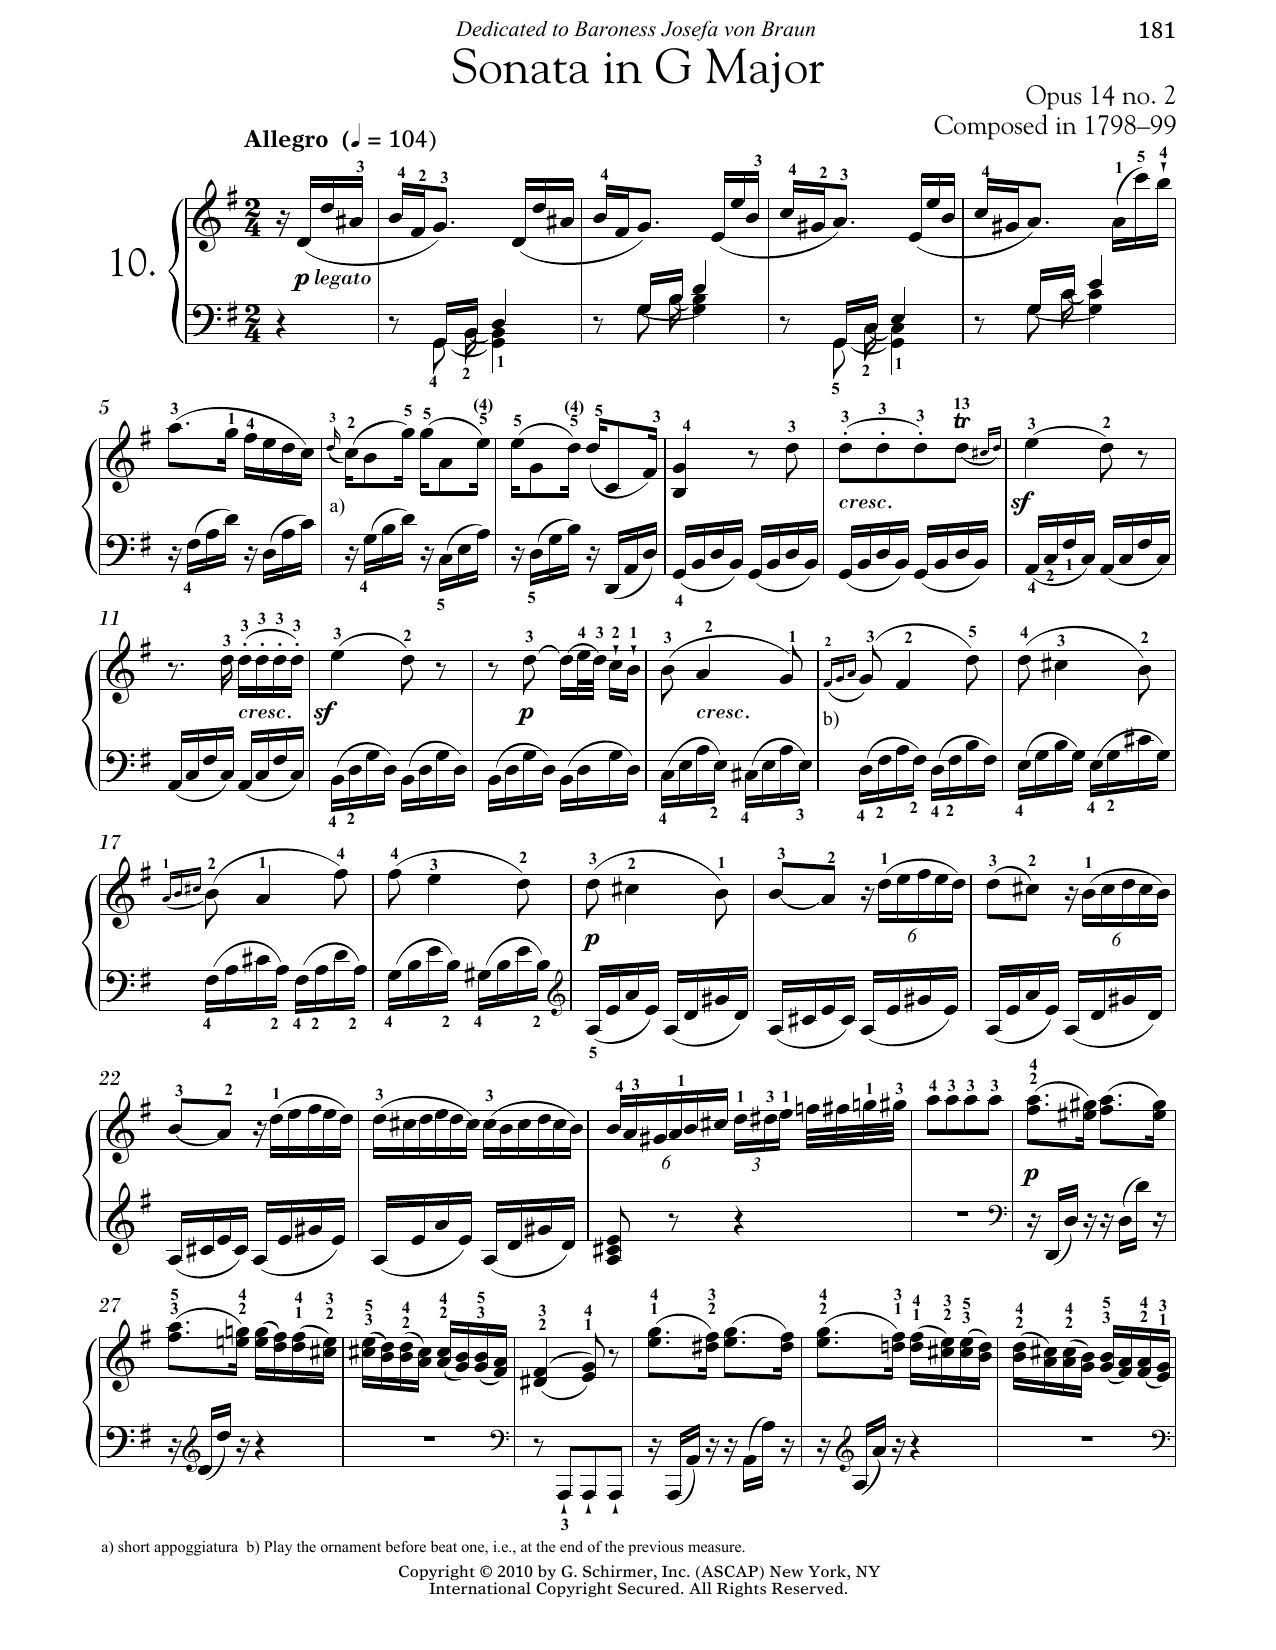 Ludwig van Beethoven Piano Sonata No. 10 In G Major, Op. 14, No. 2 Sheet Music Notes & Chords for Piano - Download or Print PDF